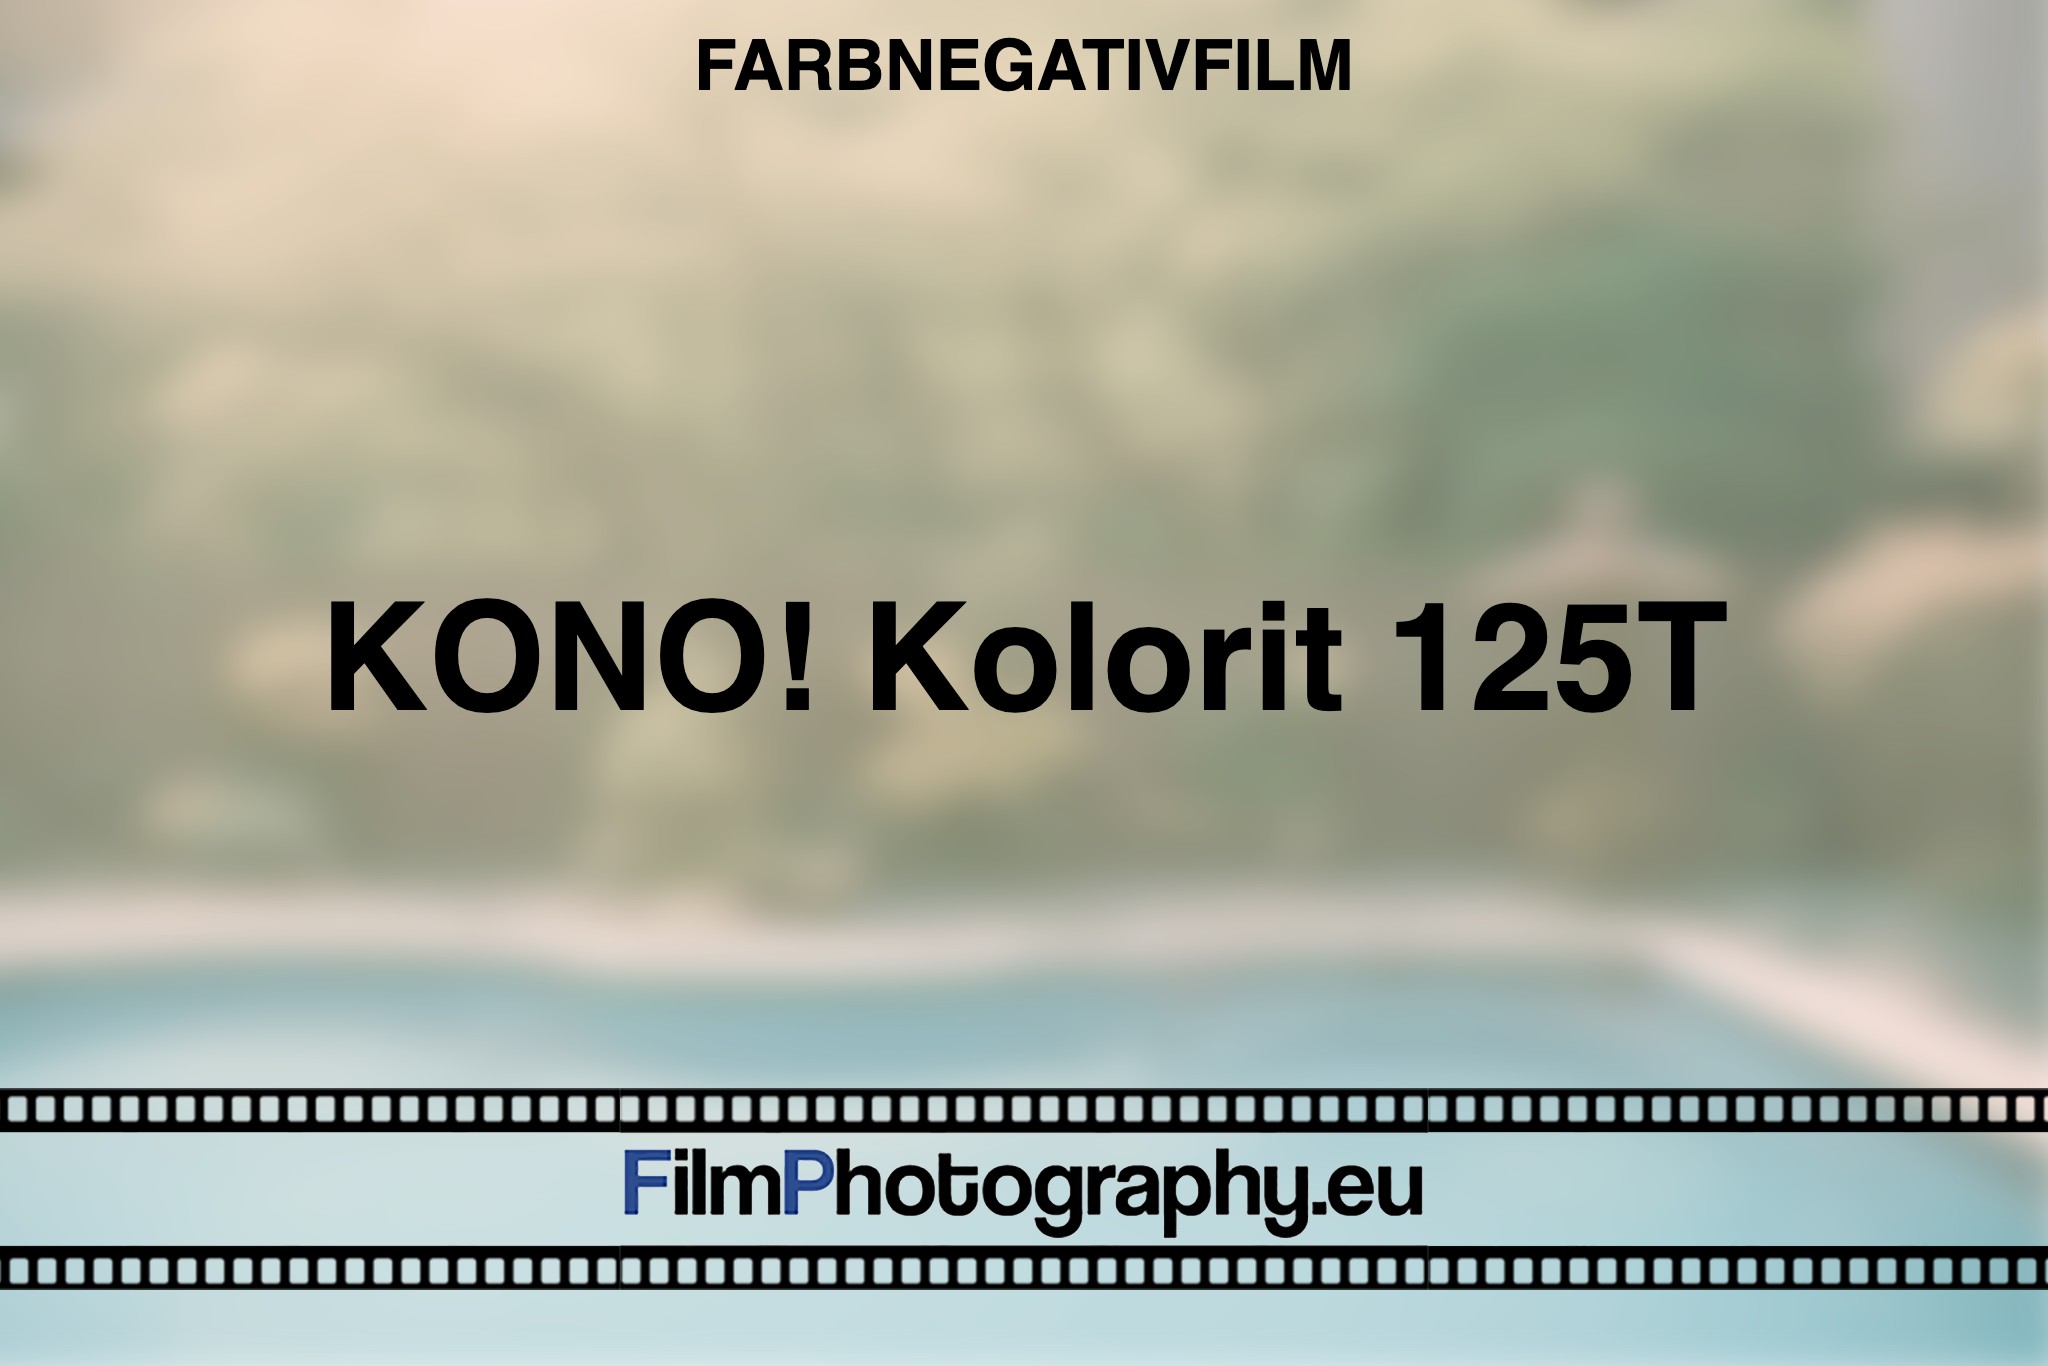 kono-kolorit-125t-farbnegativfilm-bnv